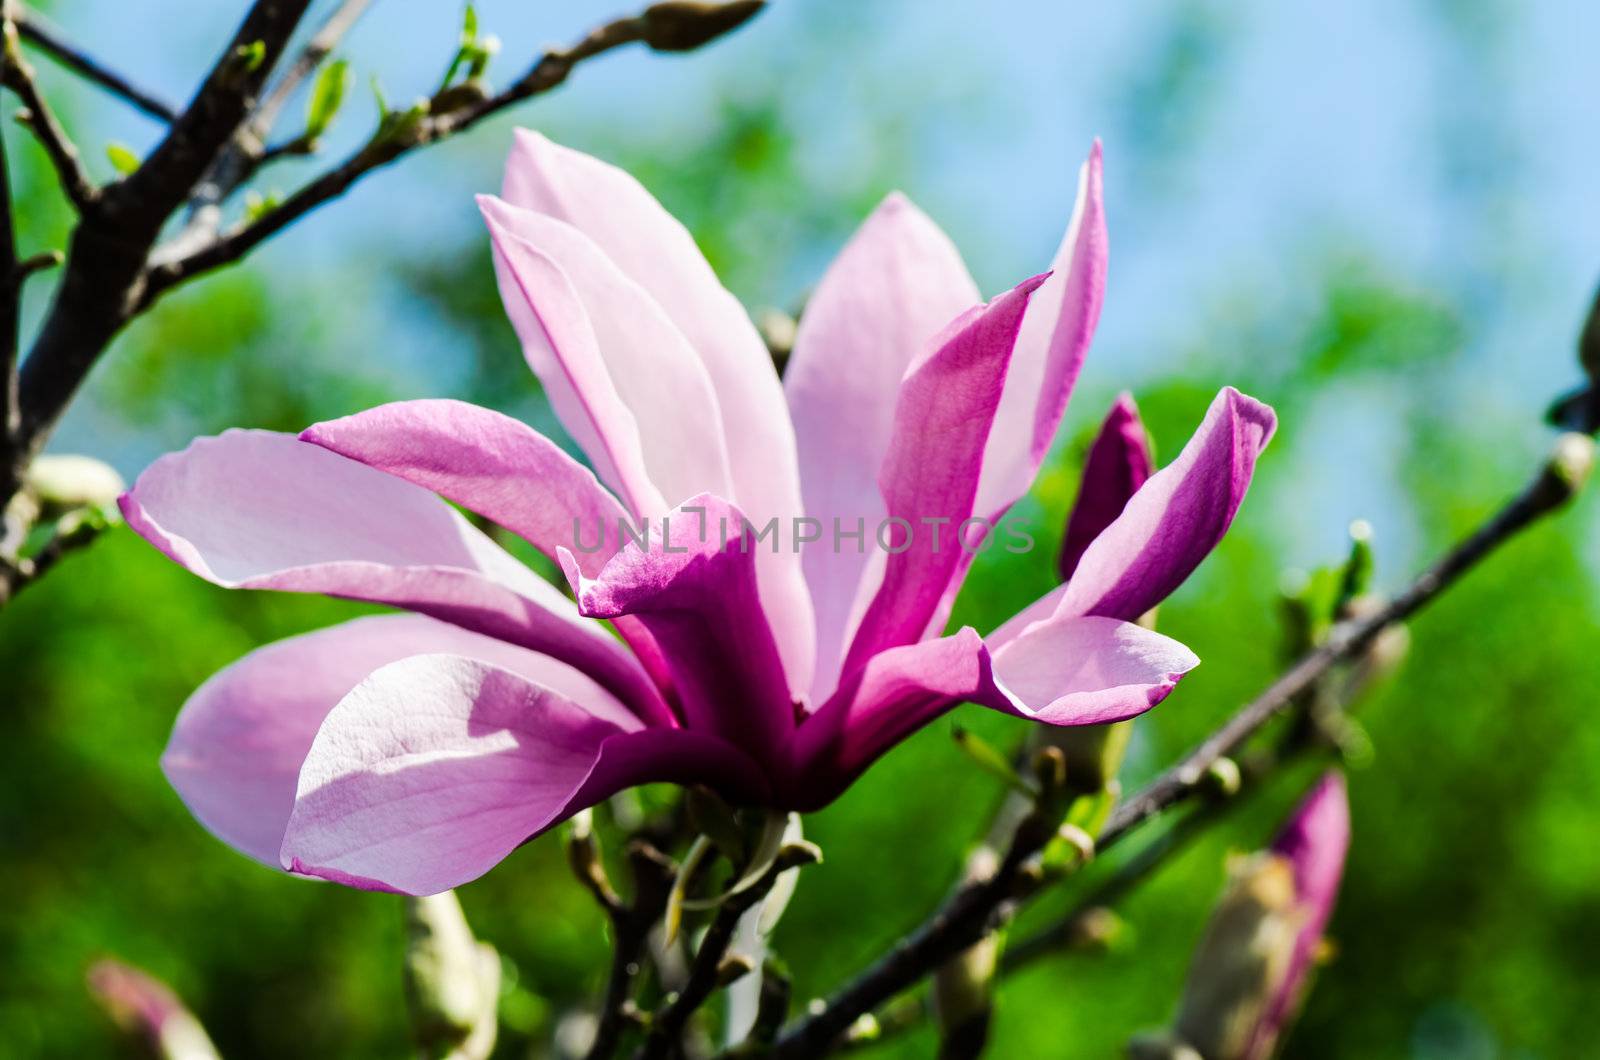 Blossom magnolia in the spring garden close up